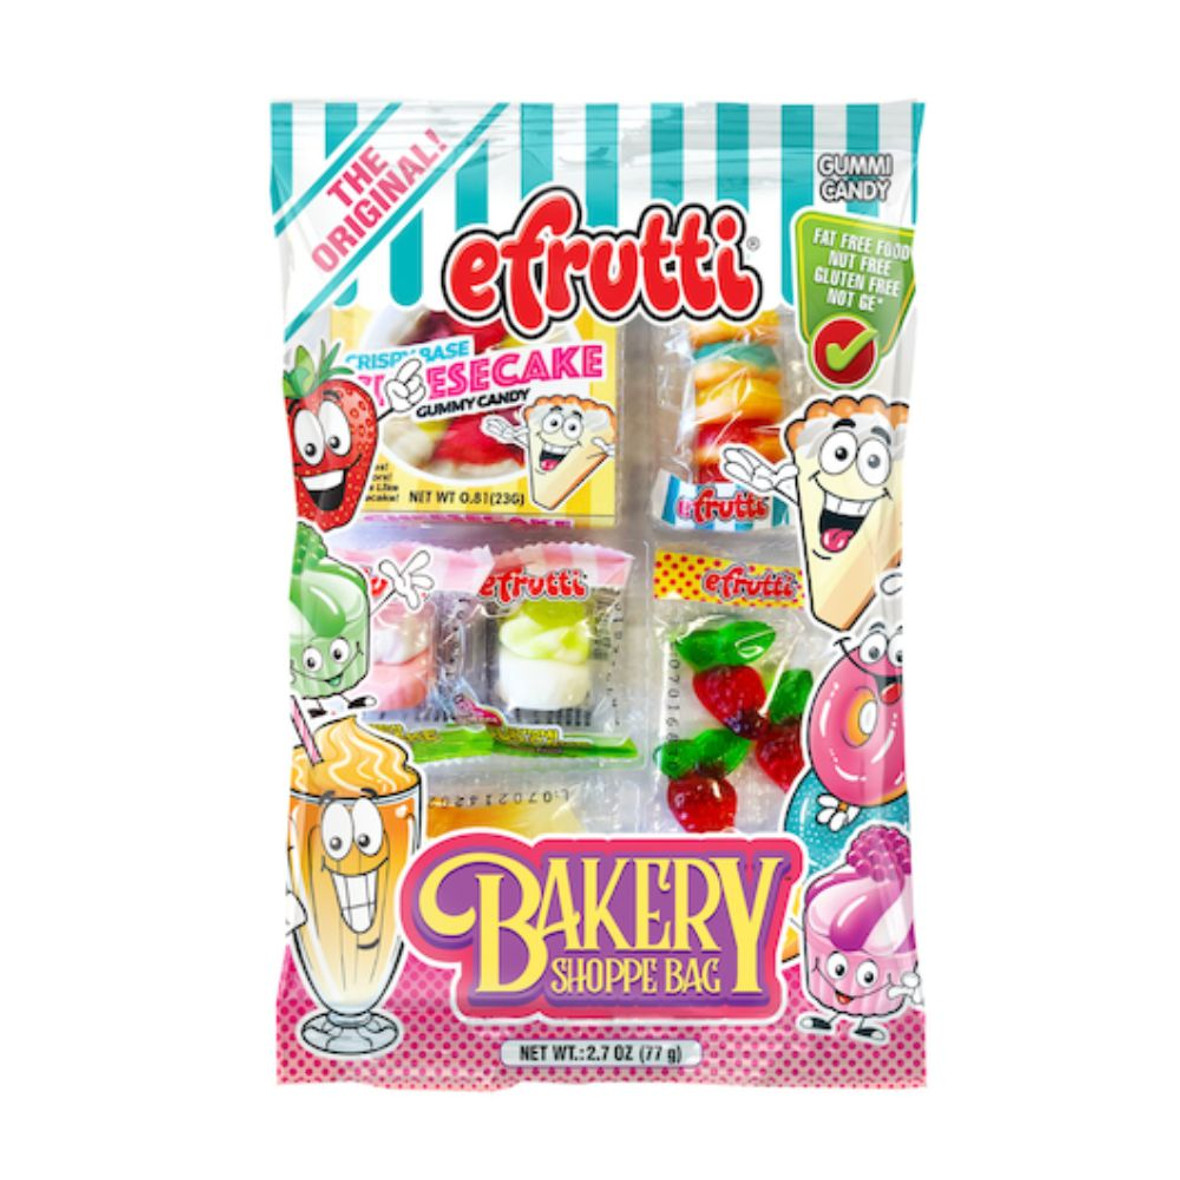 Efrutti Bakery Shoppe Bag Gummy Candy